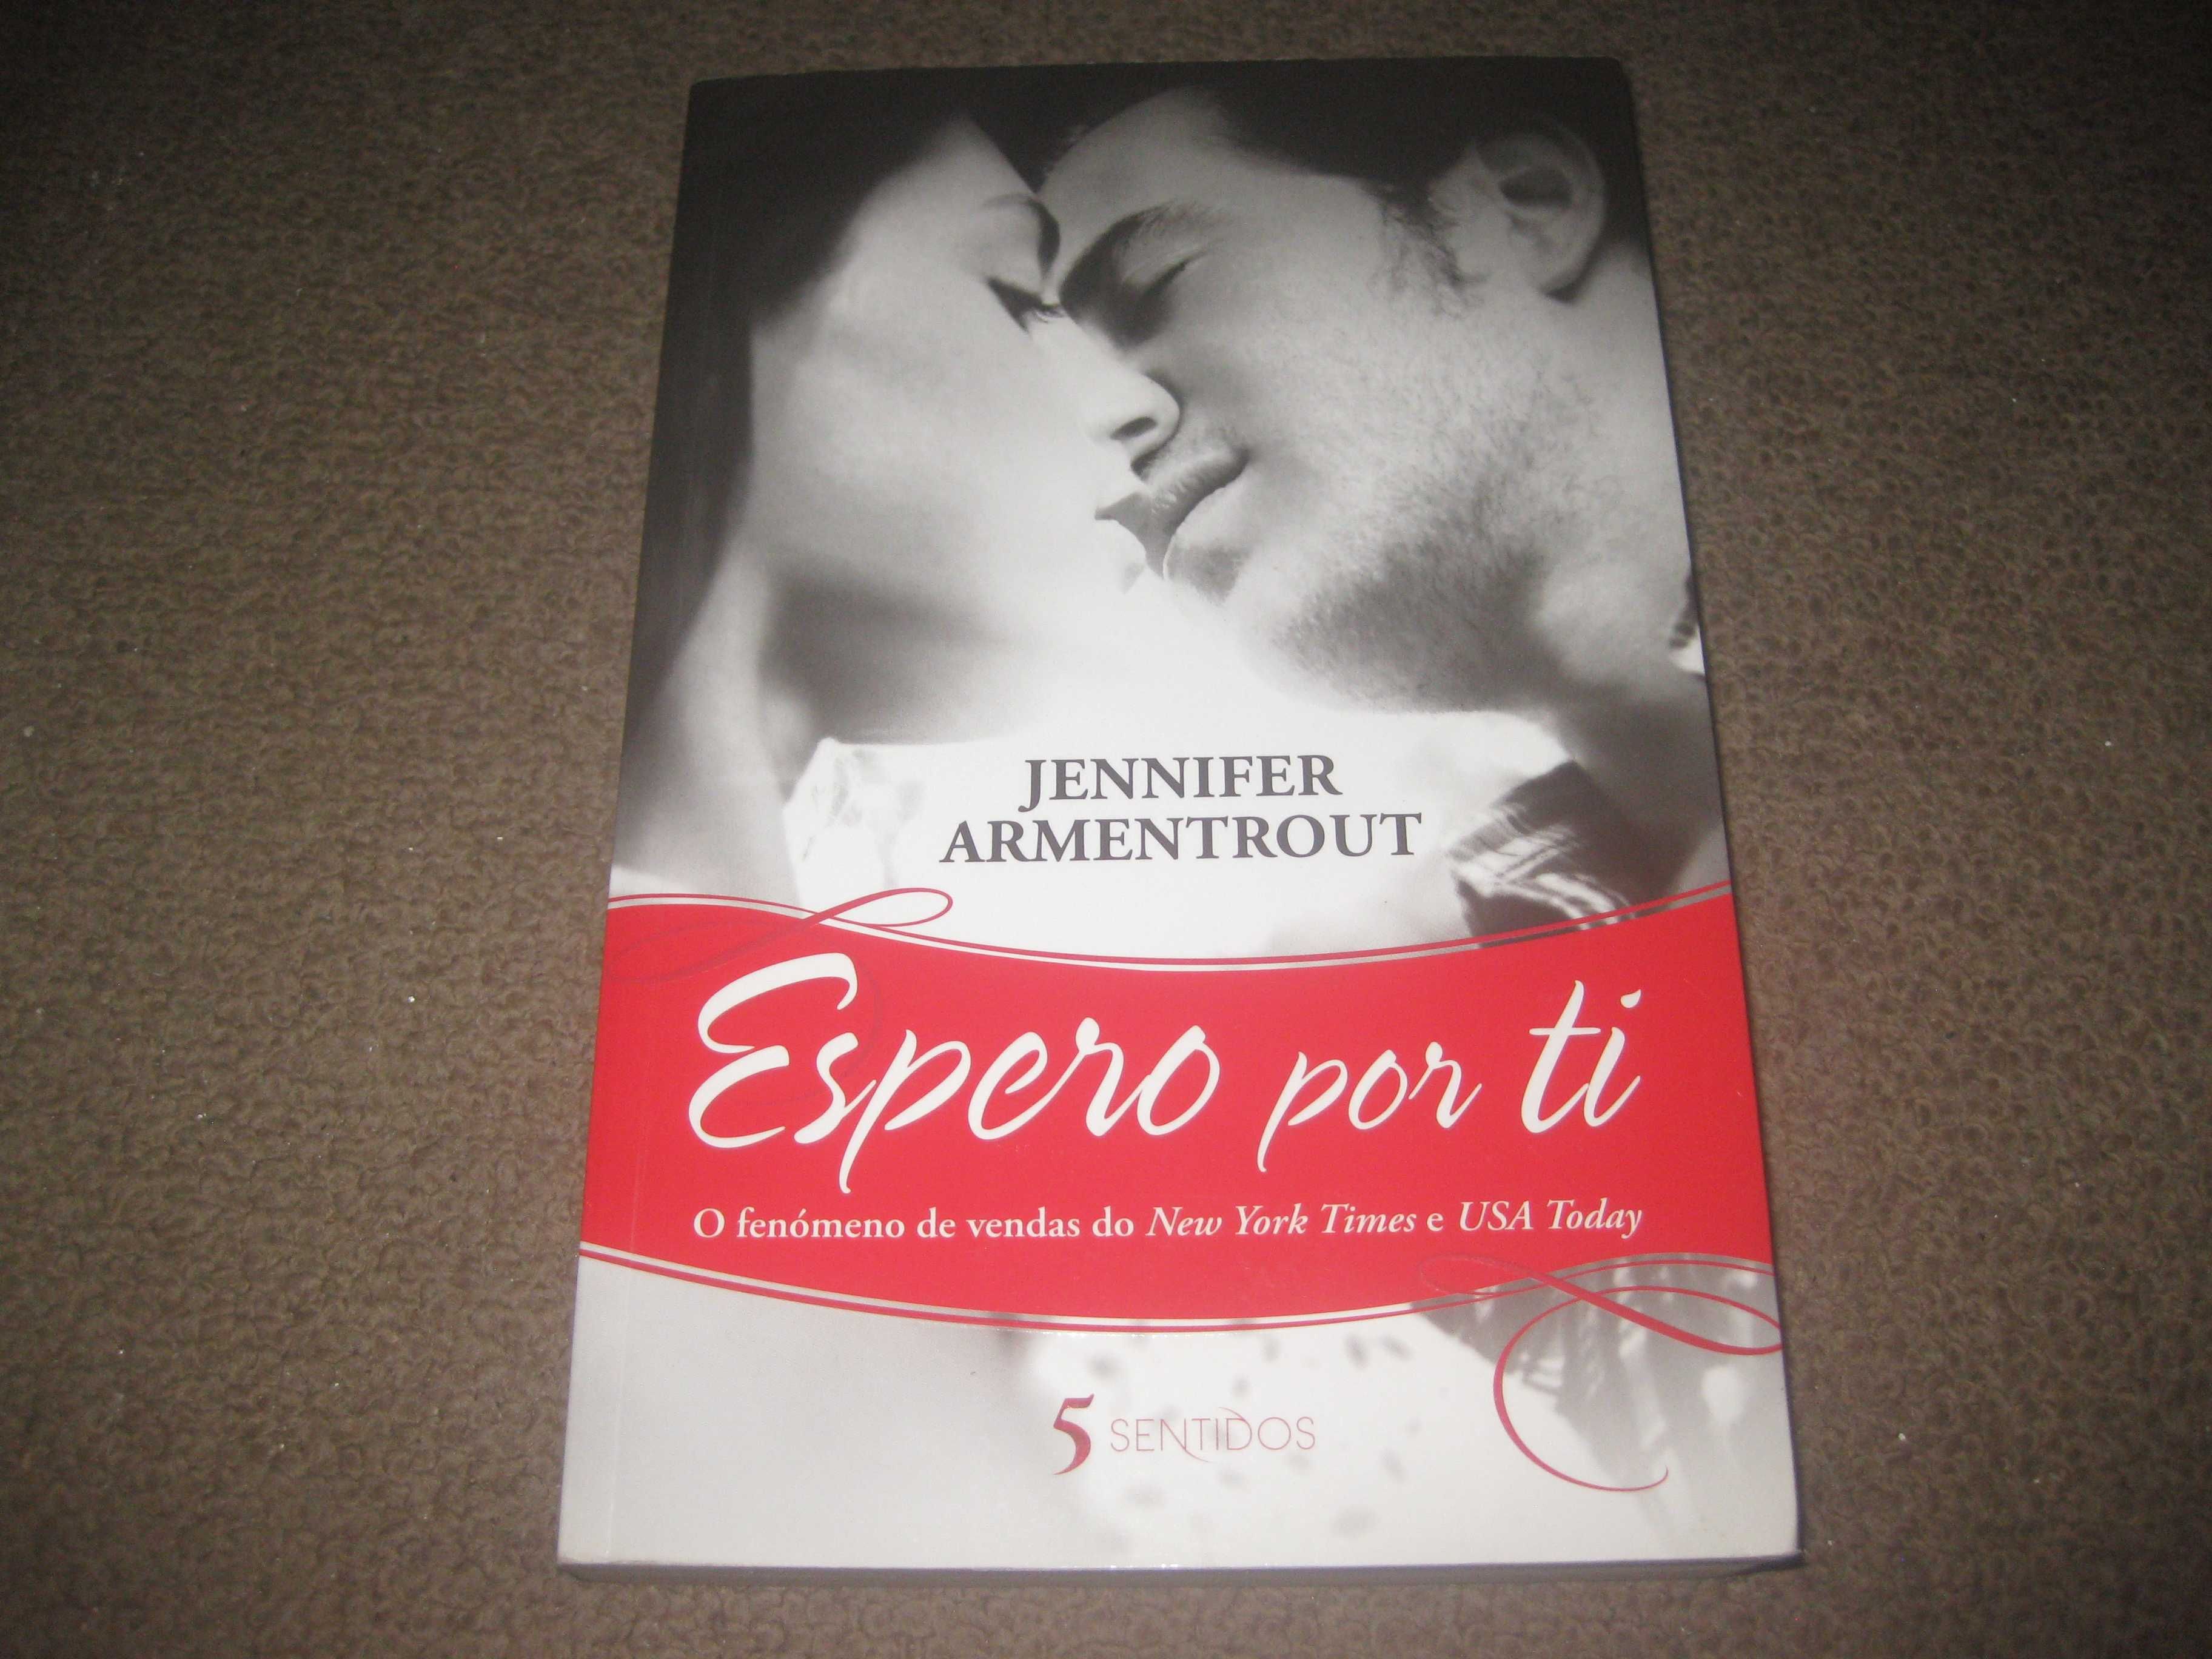 Livro “Espero por Ti" de Jennifer Armentrout